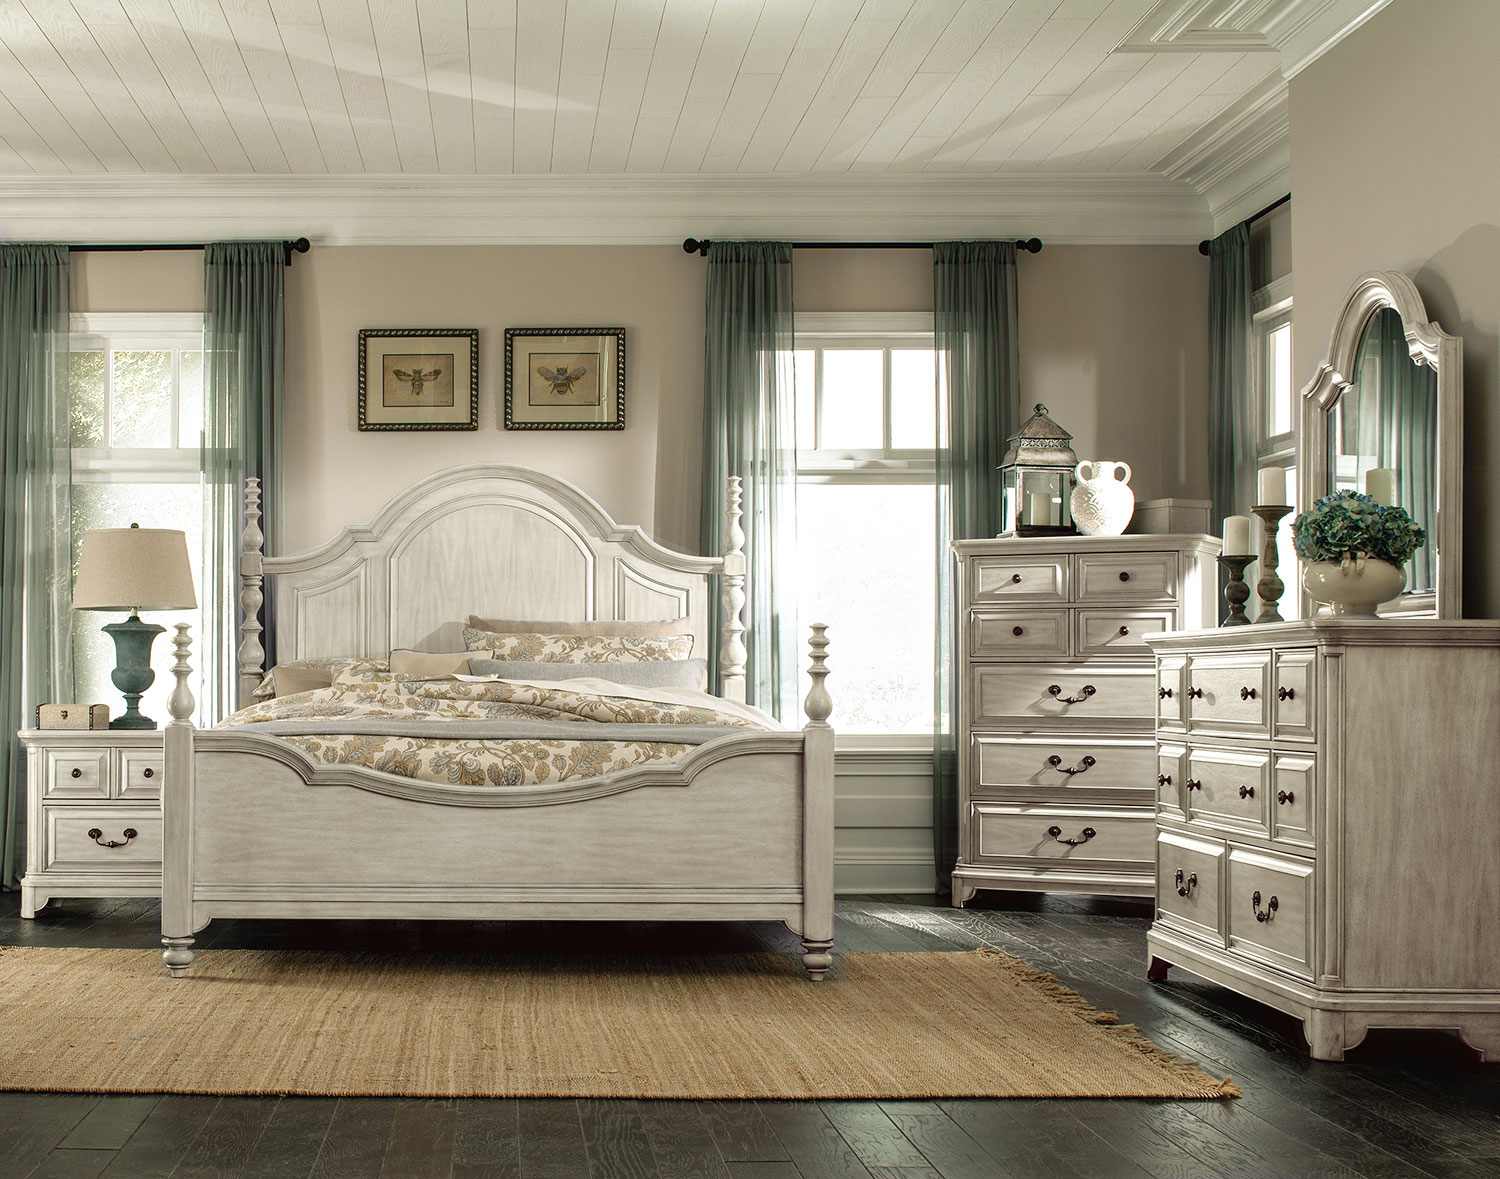 Windsor Lane 4 Piece King Bedroom Set White in size 1500 X 1179